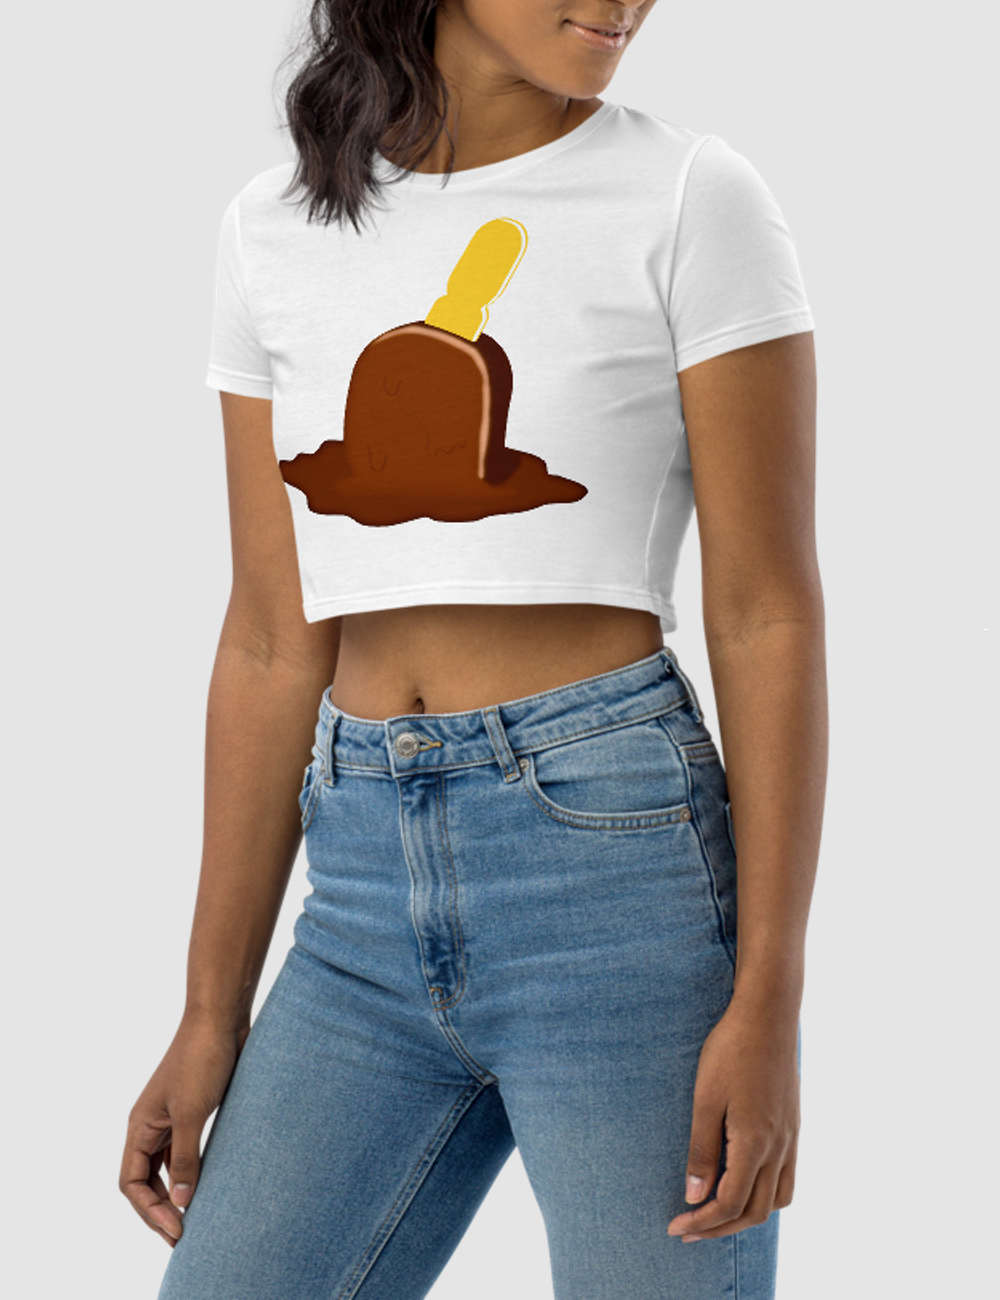 Melting Chocolate Popsicle Stick | Women's Crop Top T-Shirt OniTakai